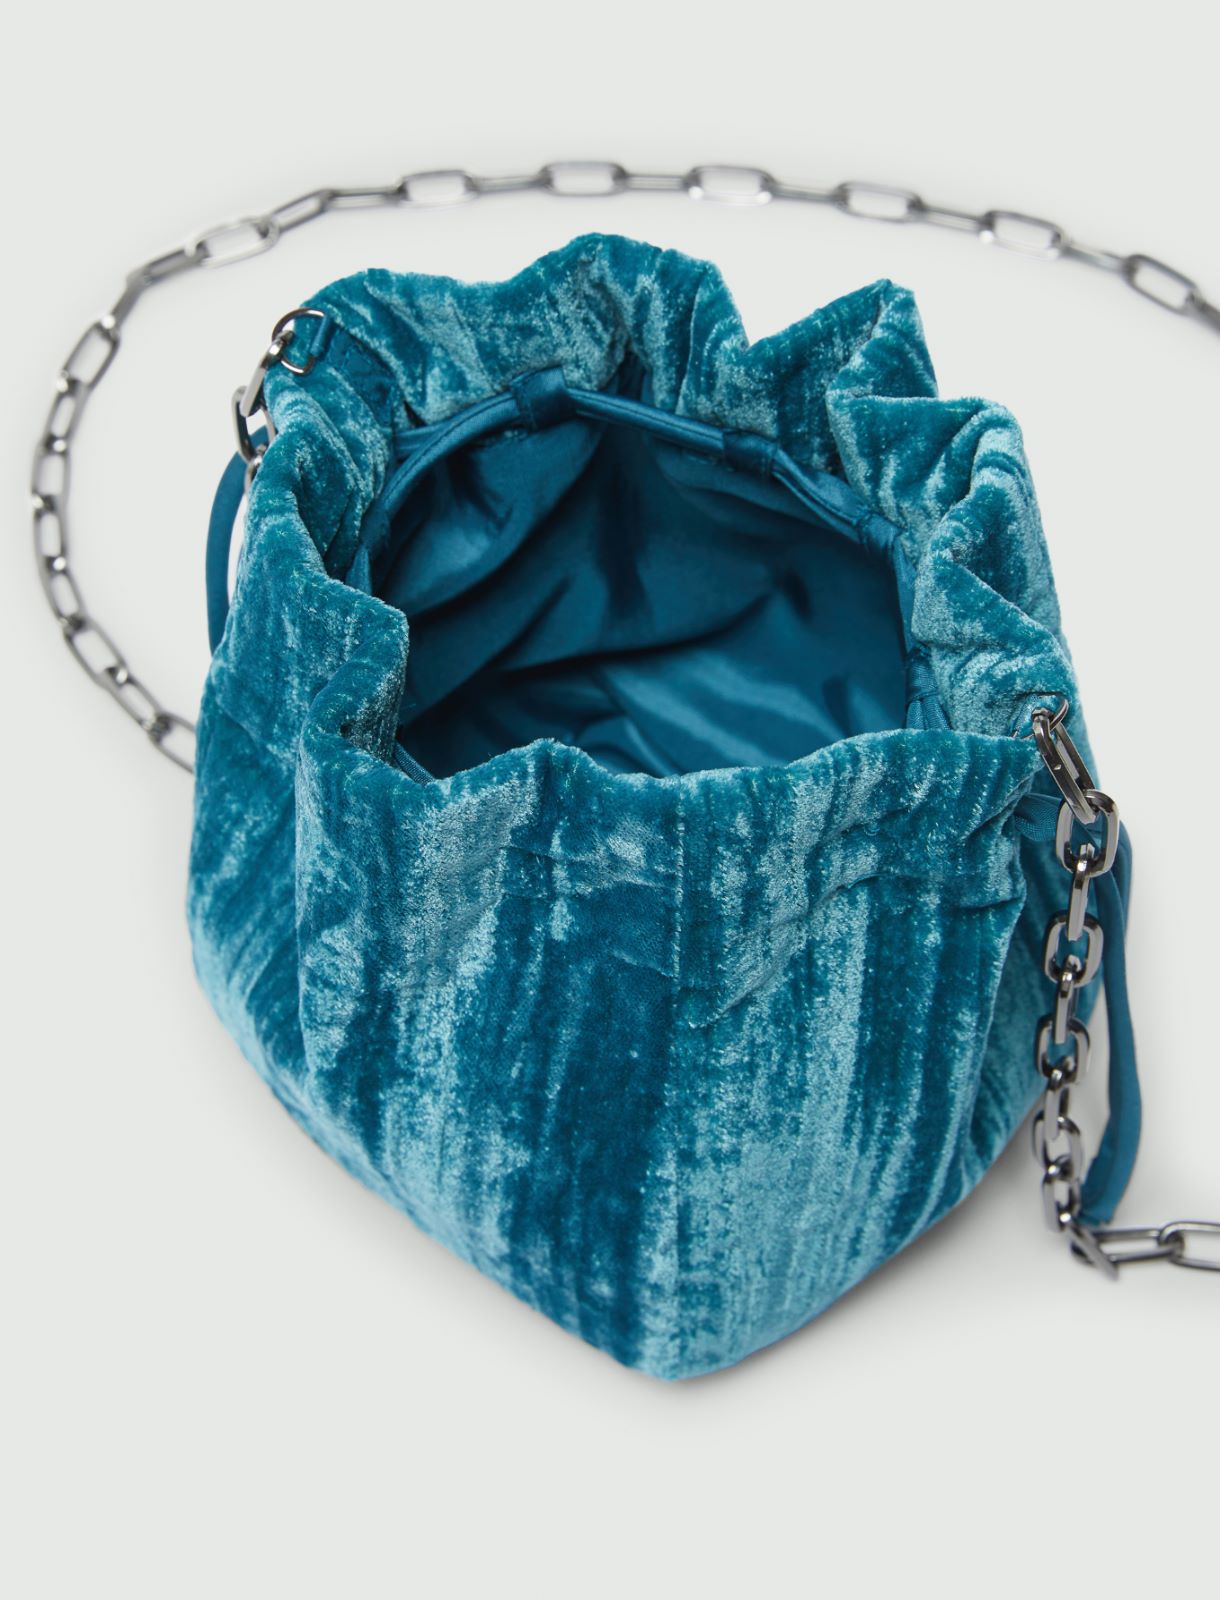 Velvet bag - Peacock blue - Marina Rinaldi - 3